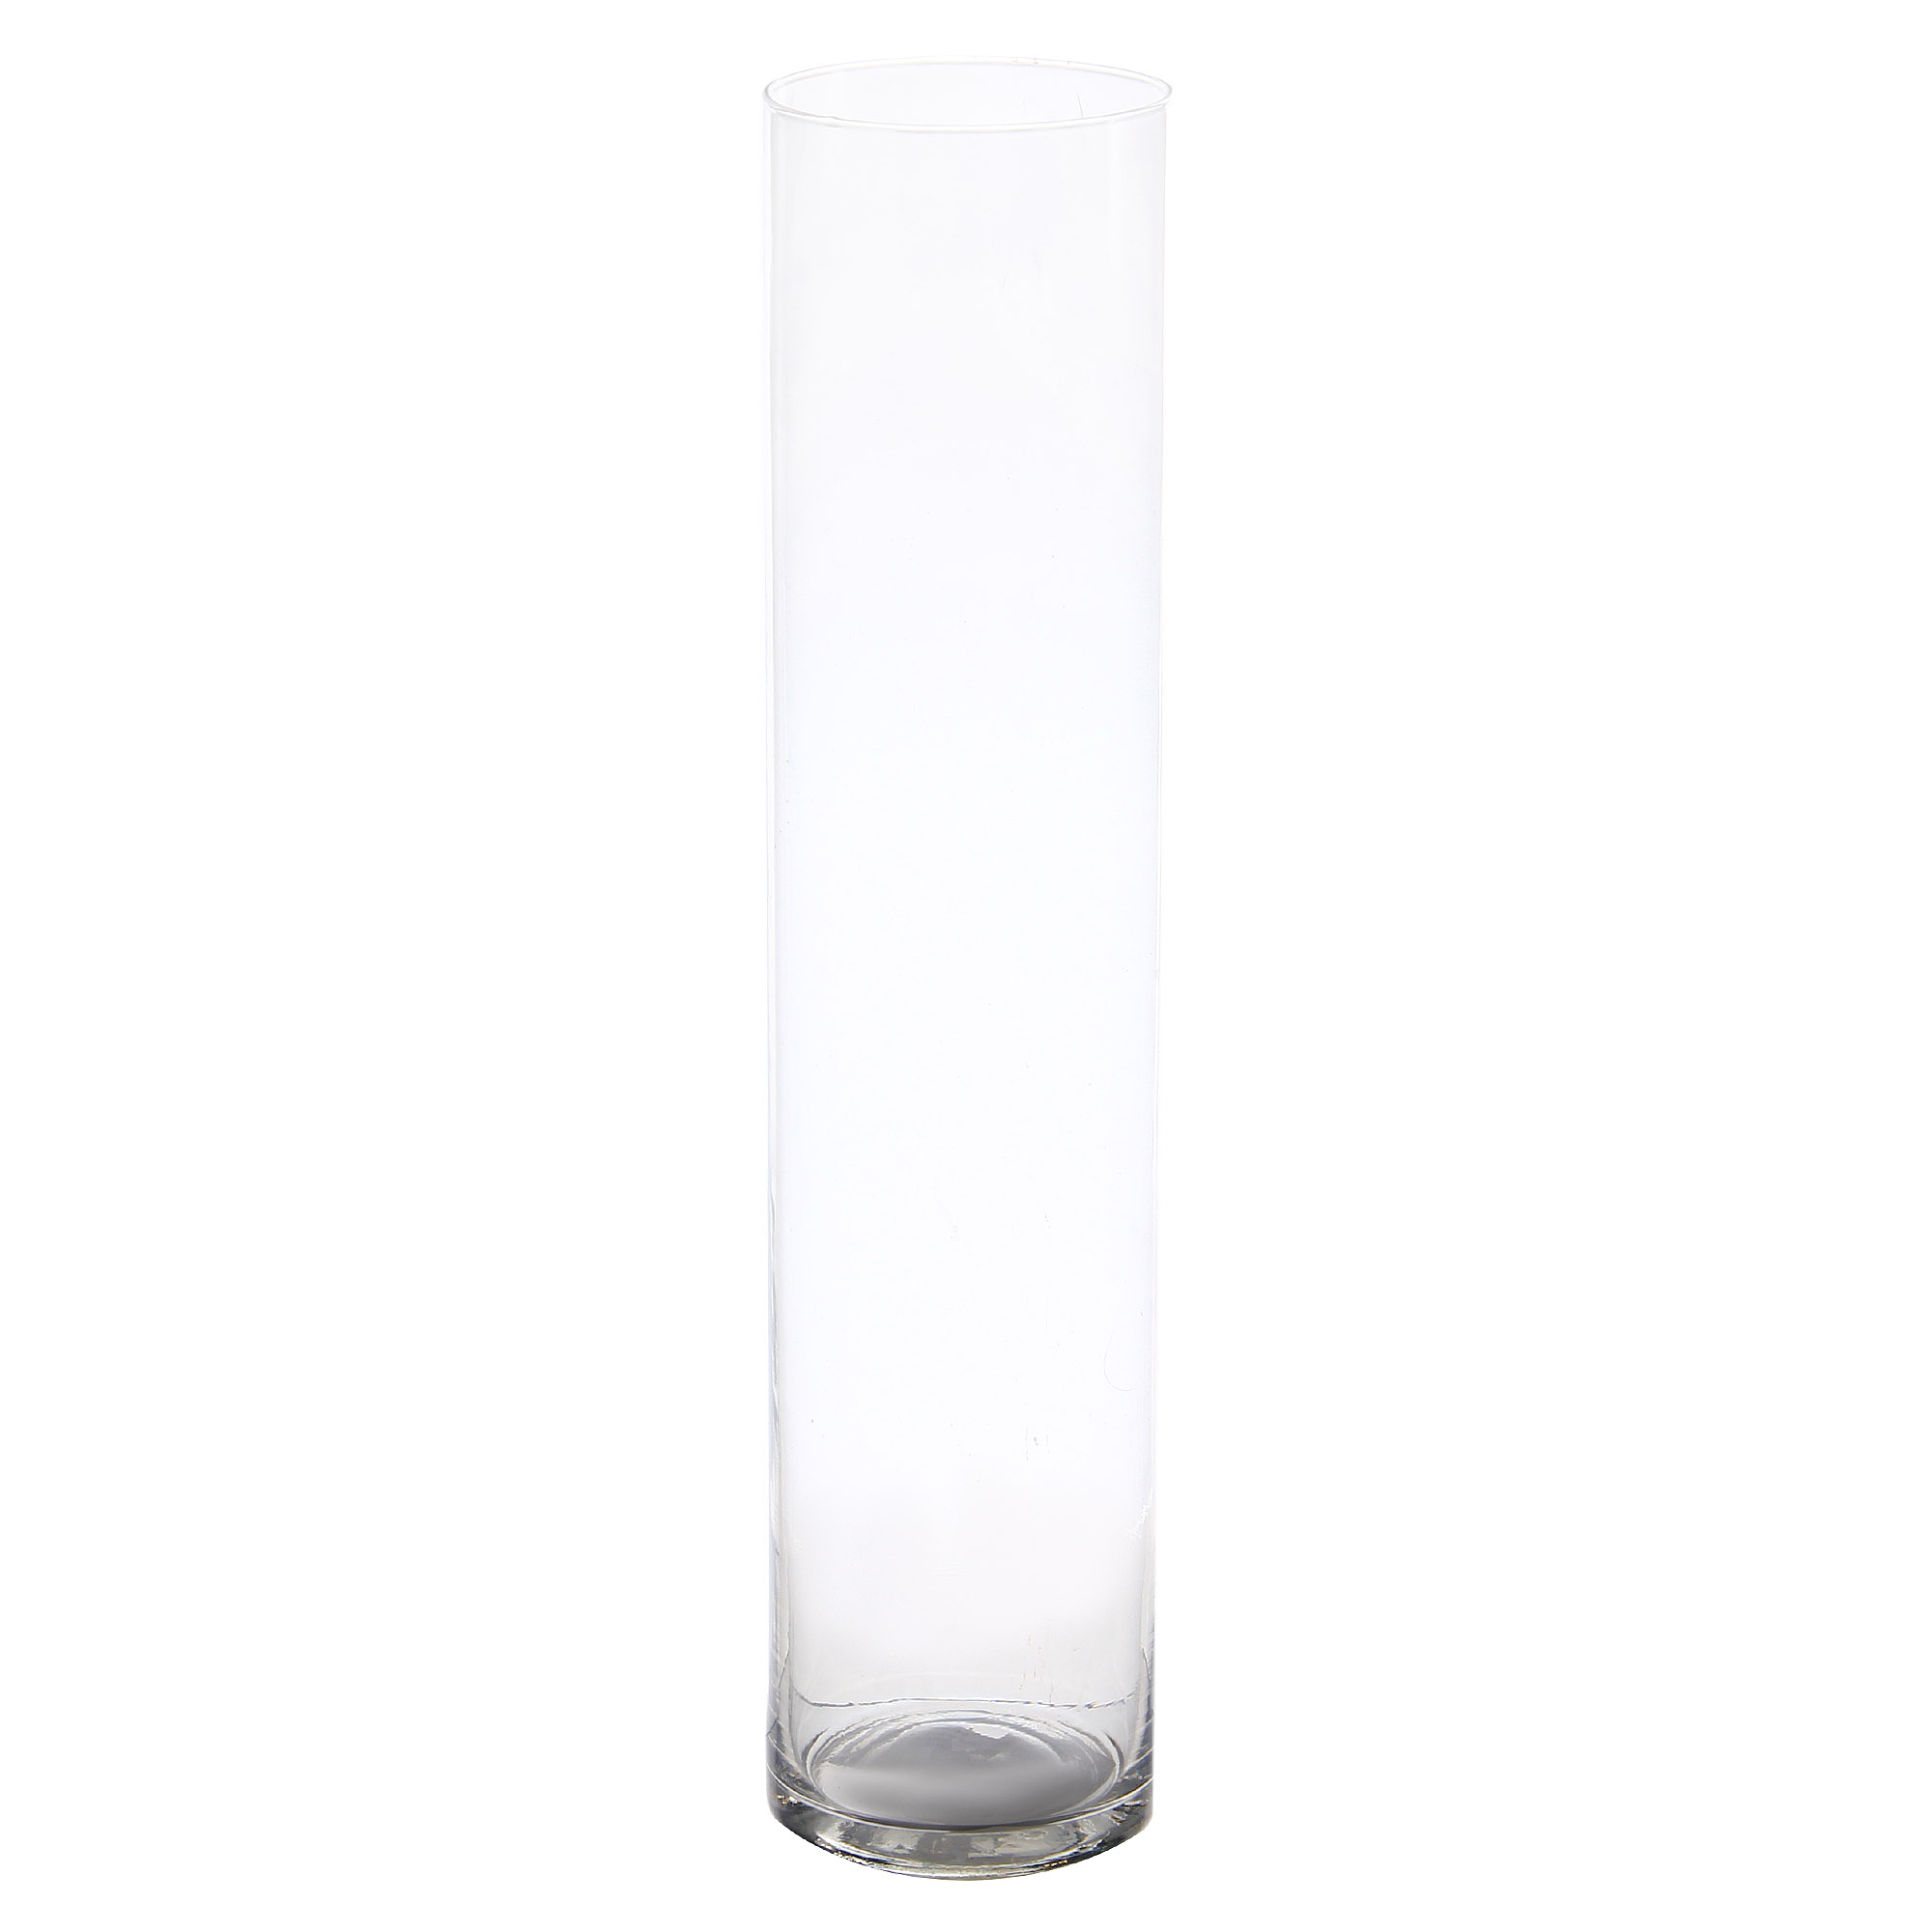 Ваза Hakbijl glass cylinder 40см